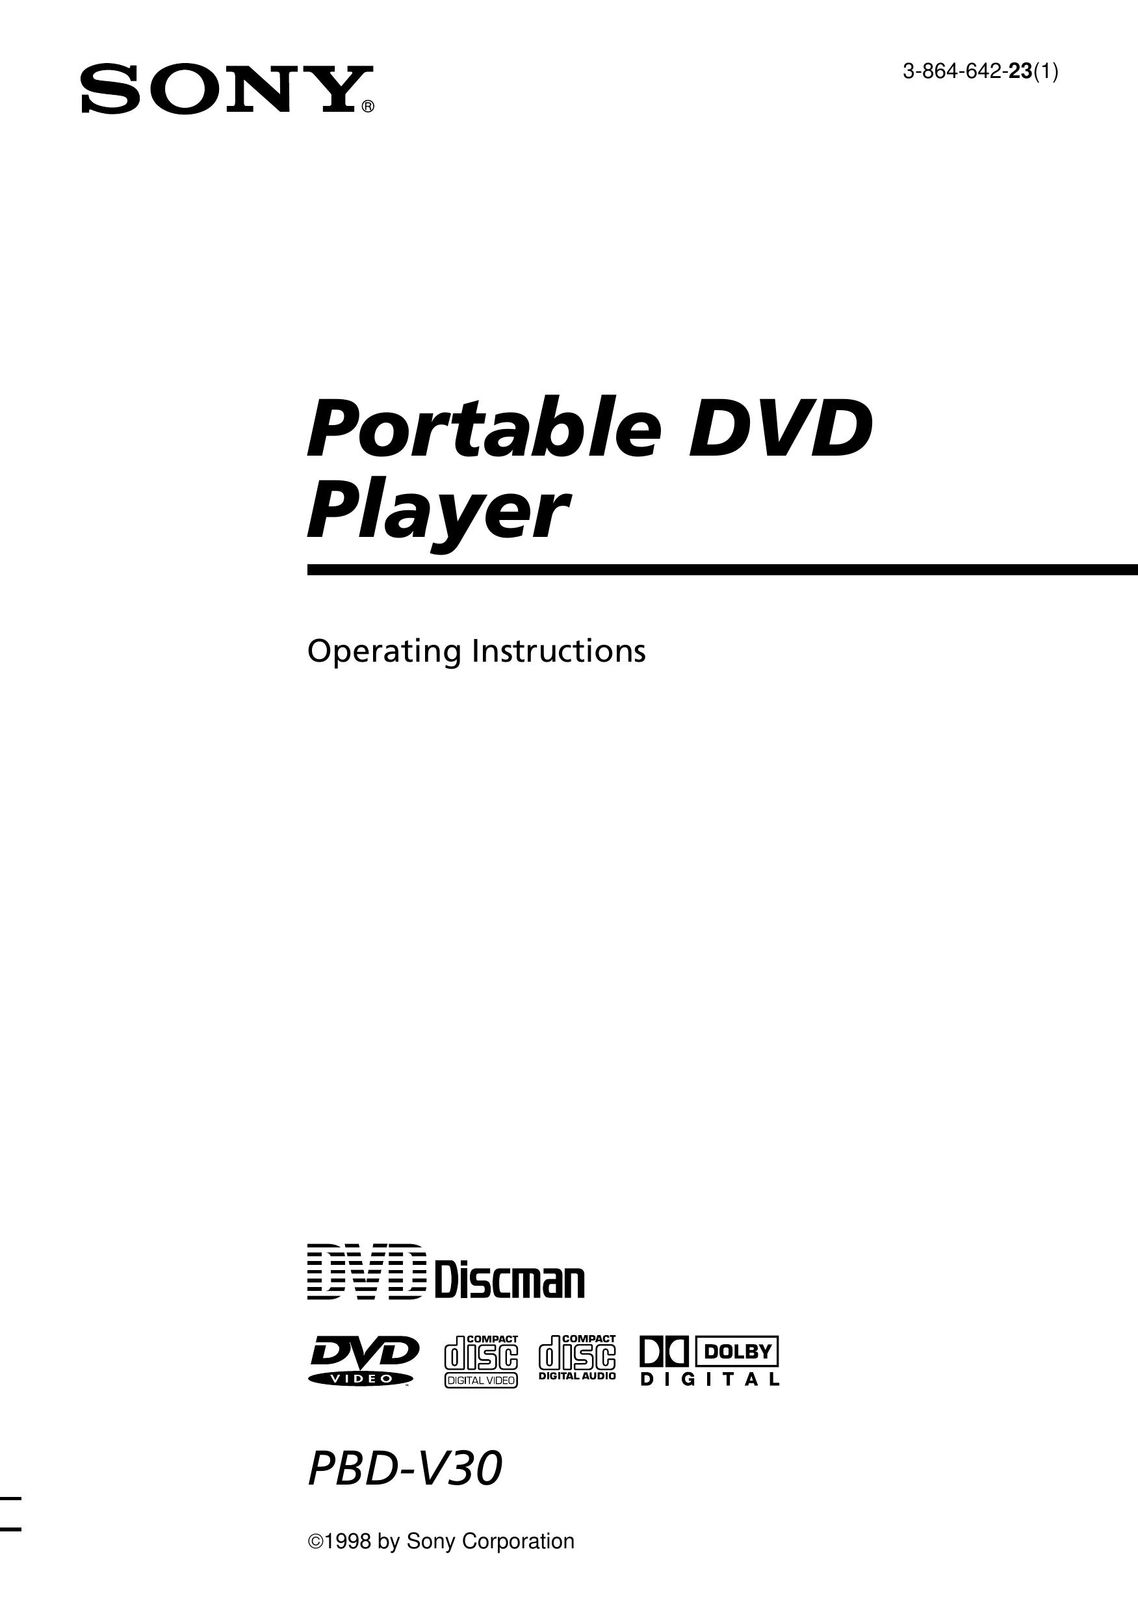 Sony PBD-V30 Portable DVD Player User Manual